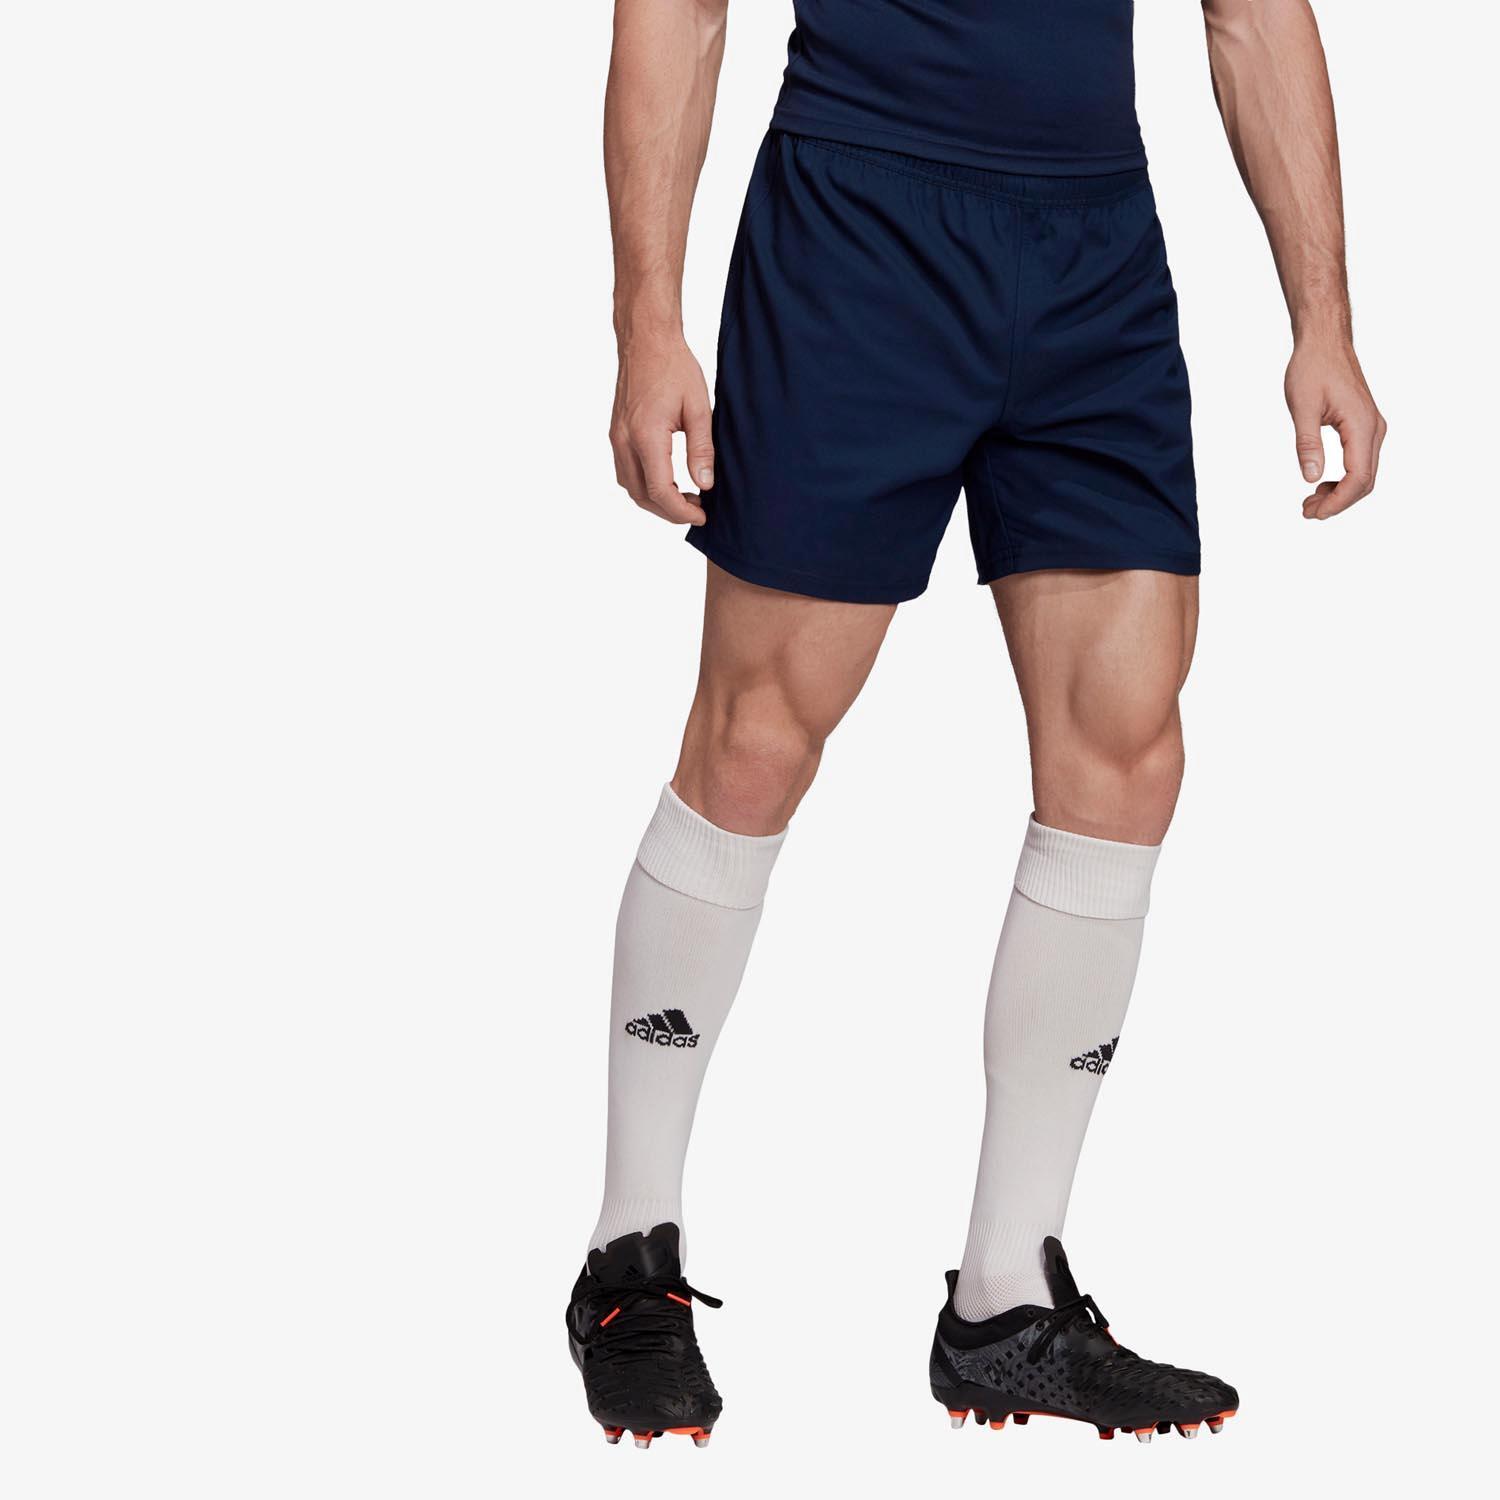 adidas 3 Stripes - Bleu - Short Homme sports taille L